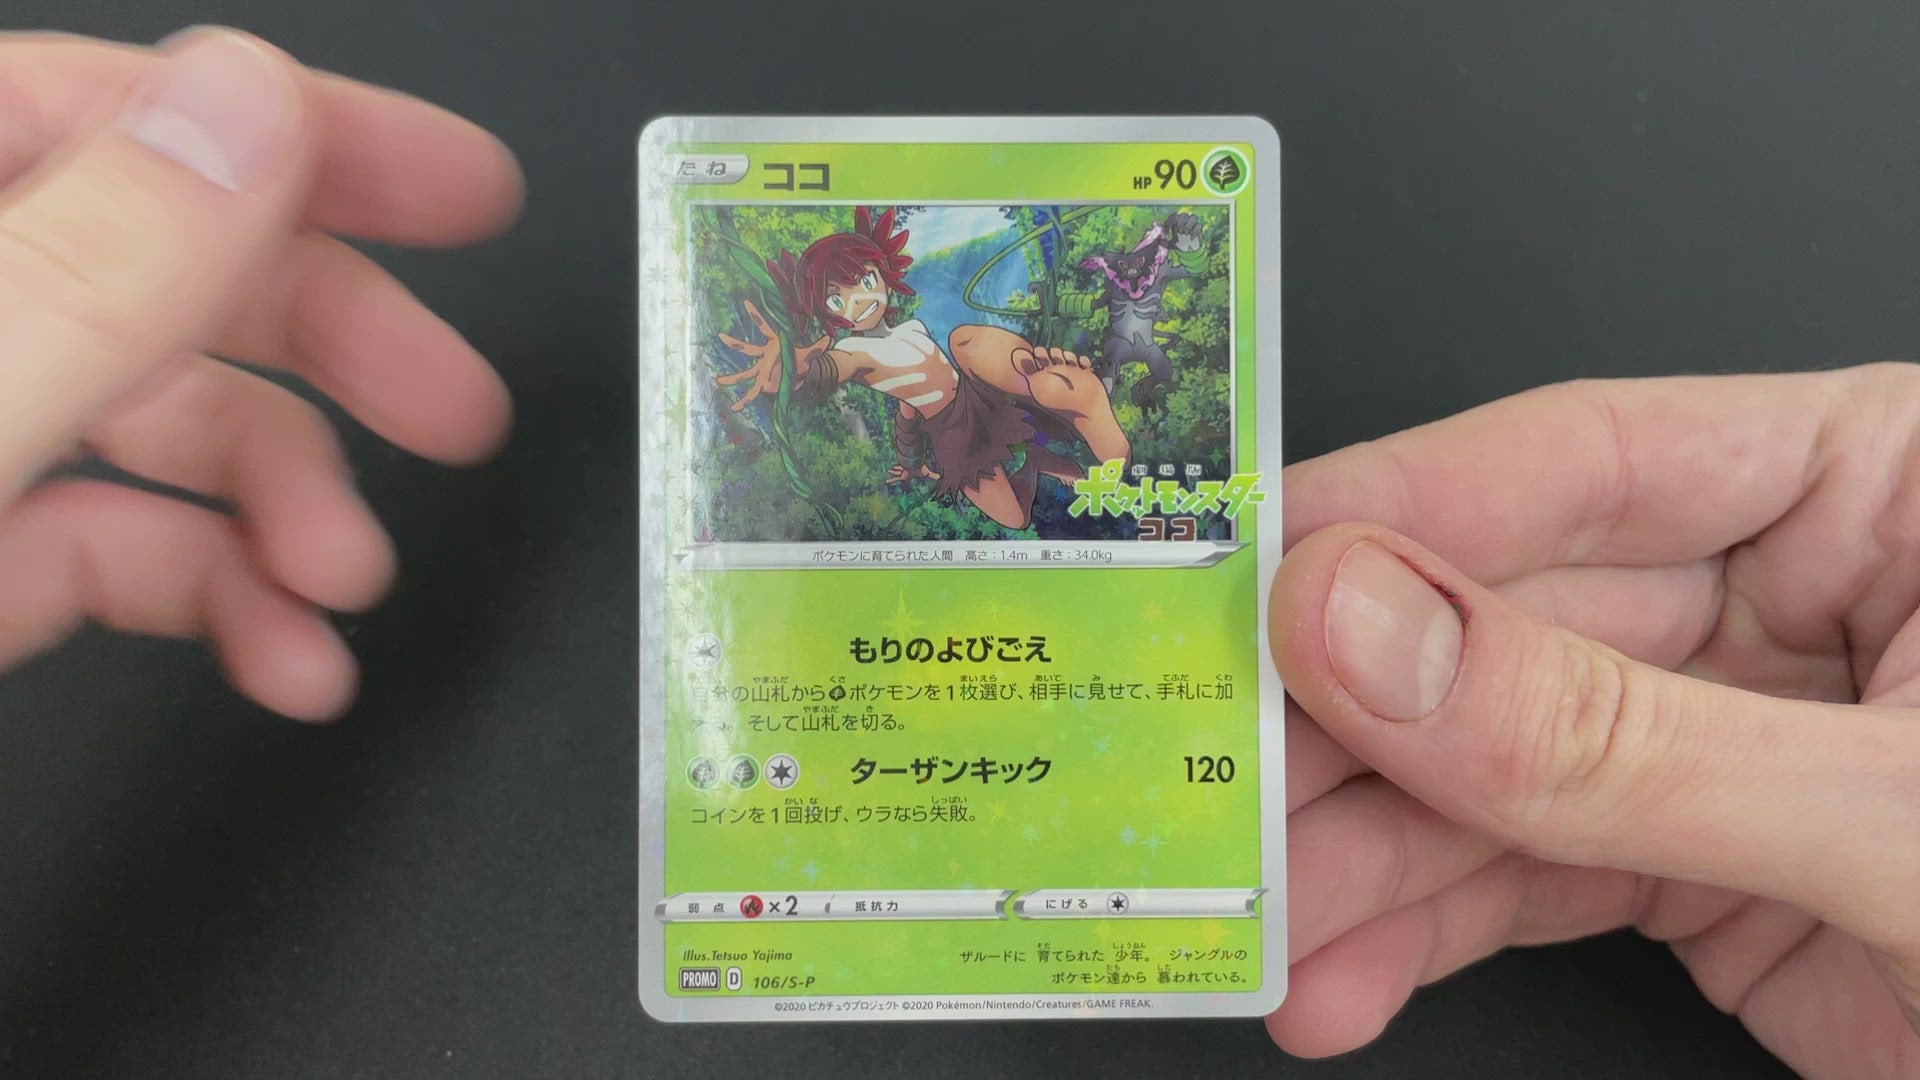 A PSA 10 Zarude V Japanese Pokemon card